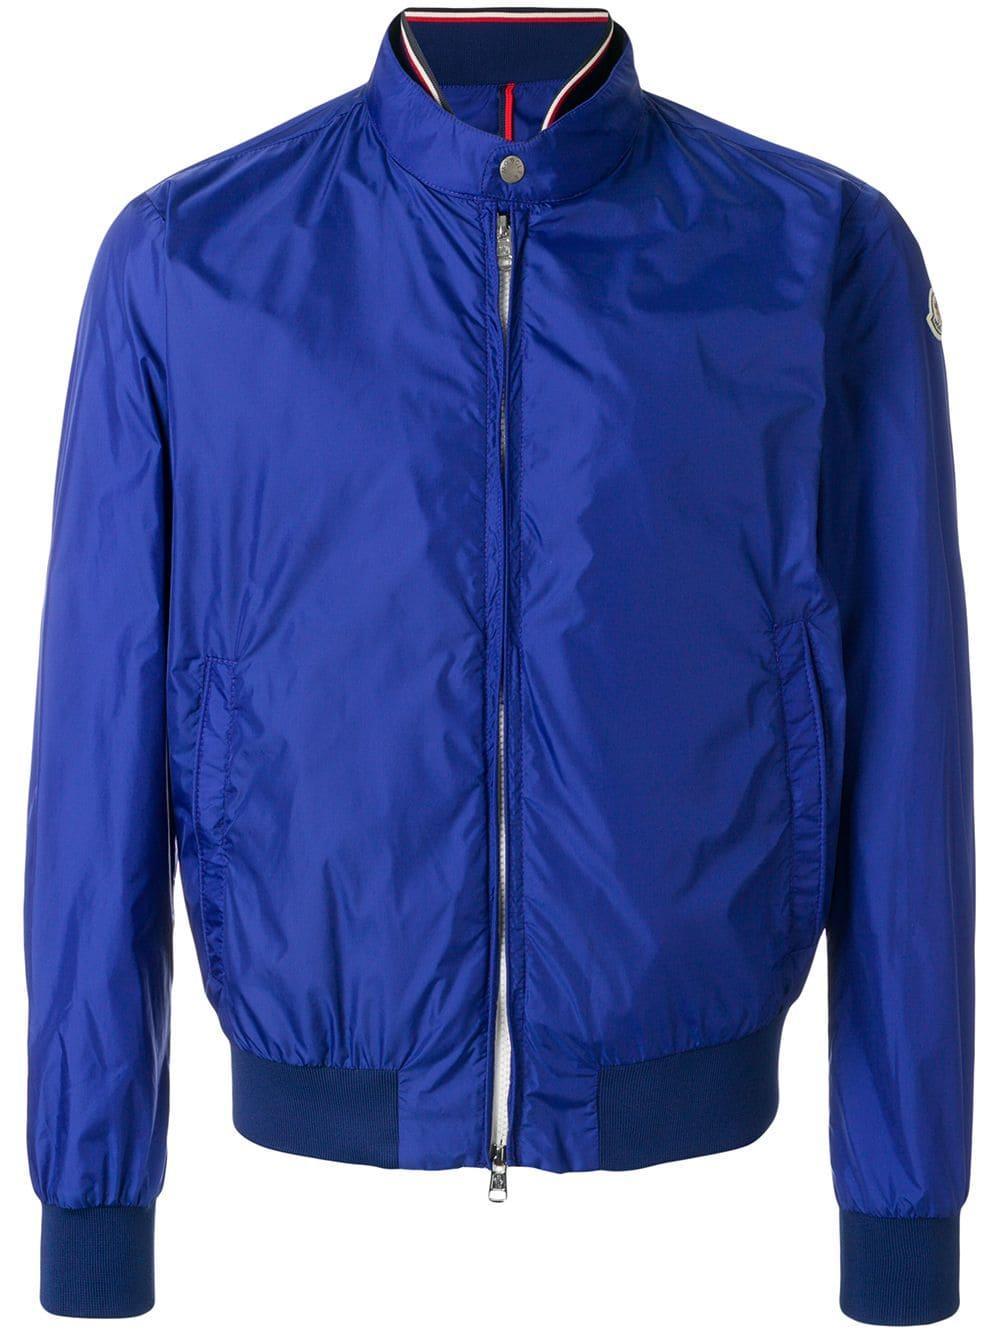 Moncler Miroir Jacket in Blue for Men - Lyst